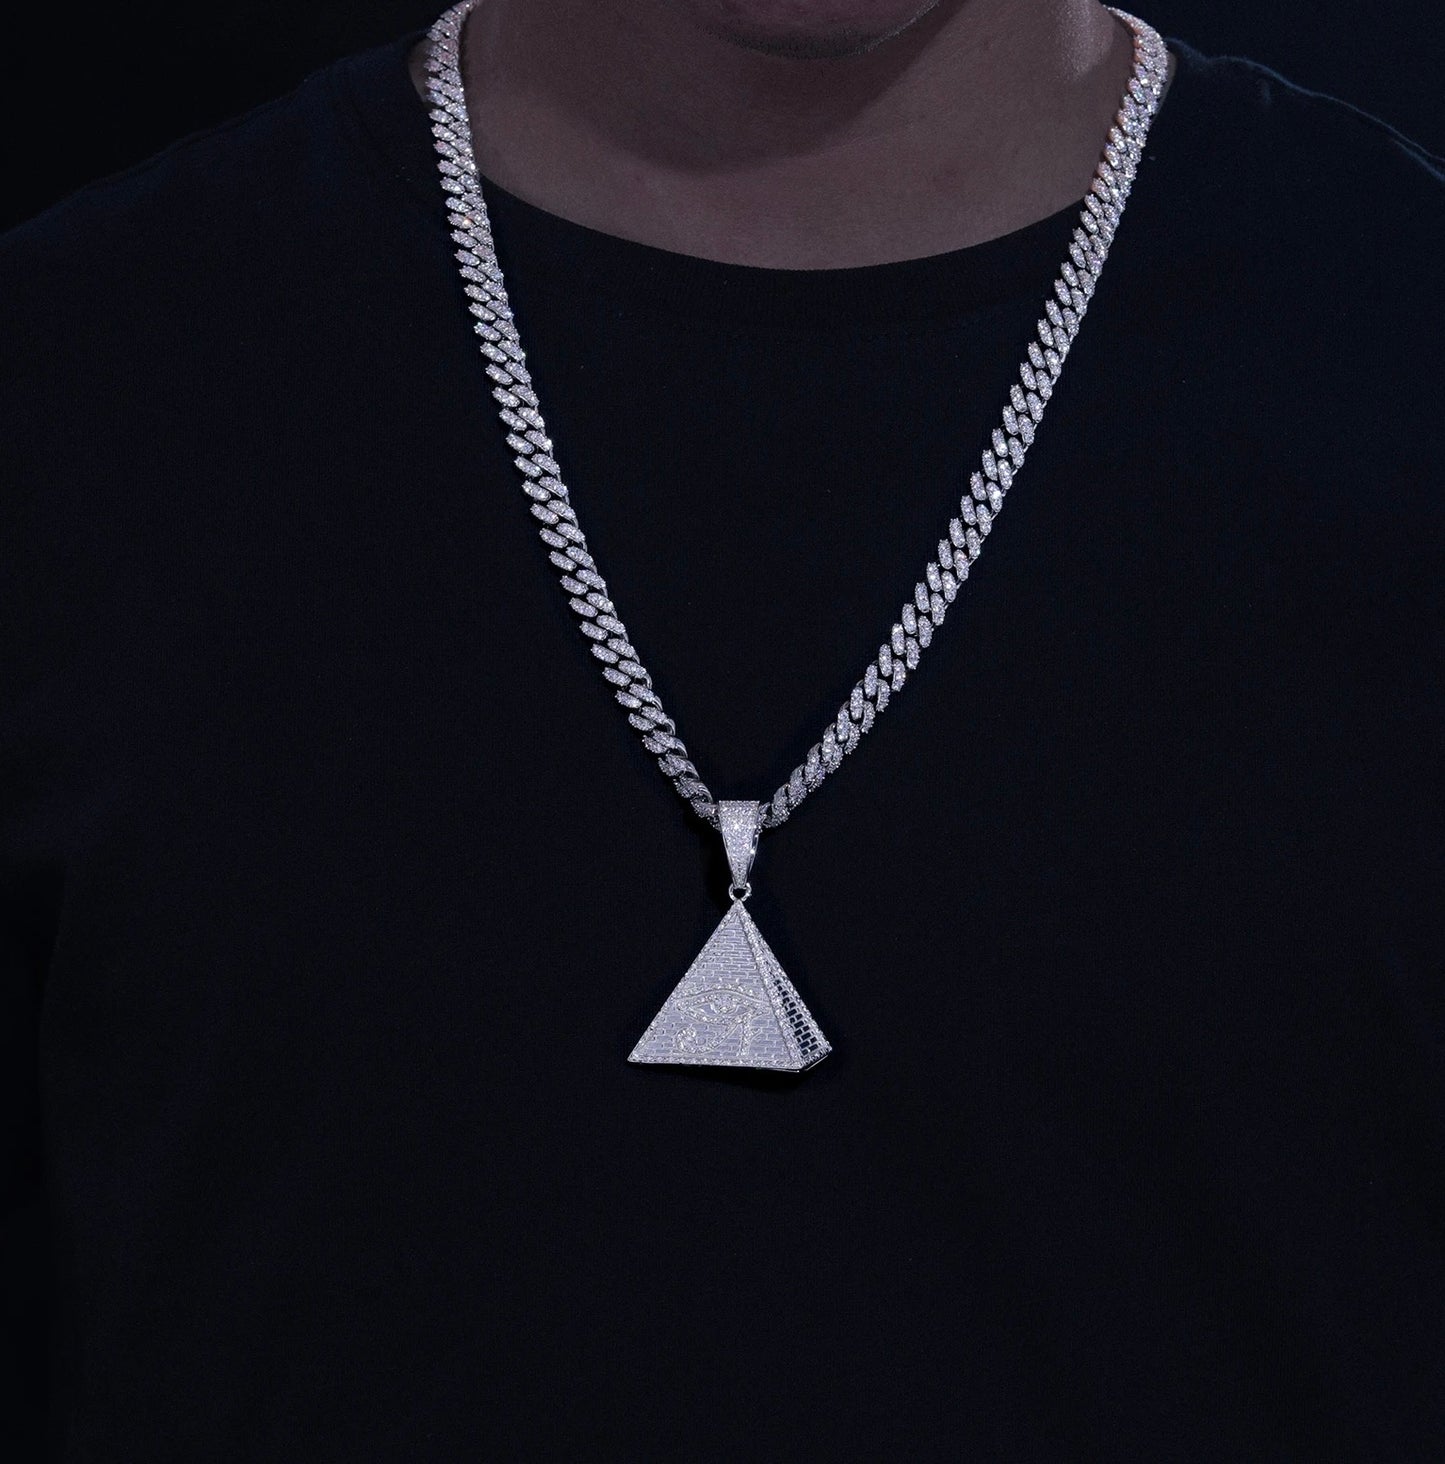 Pyramid pendant with moissanite diamonds